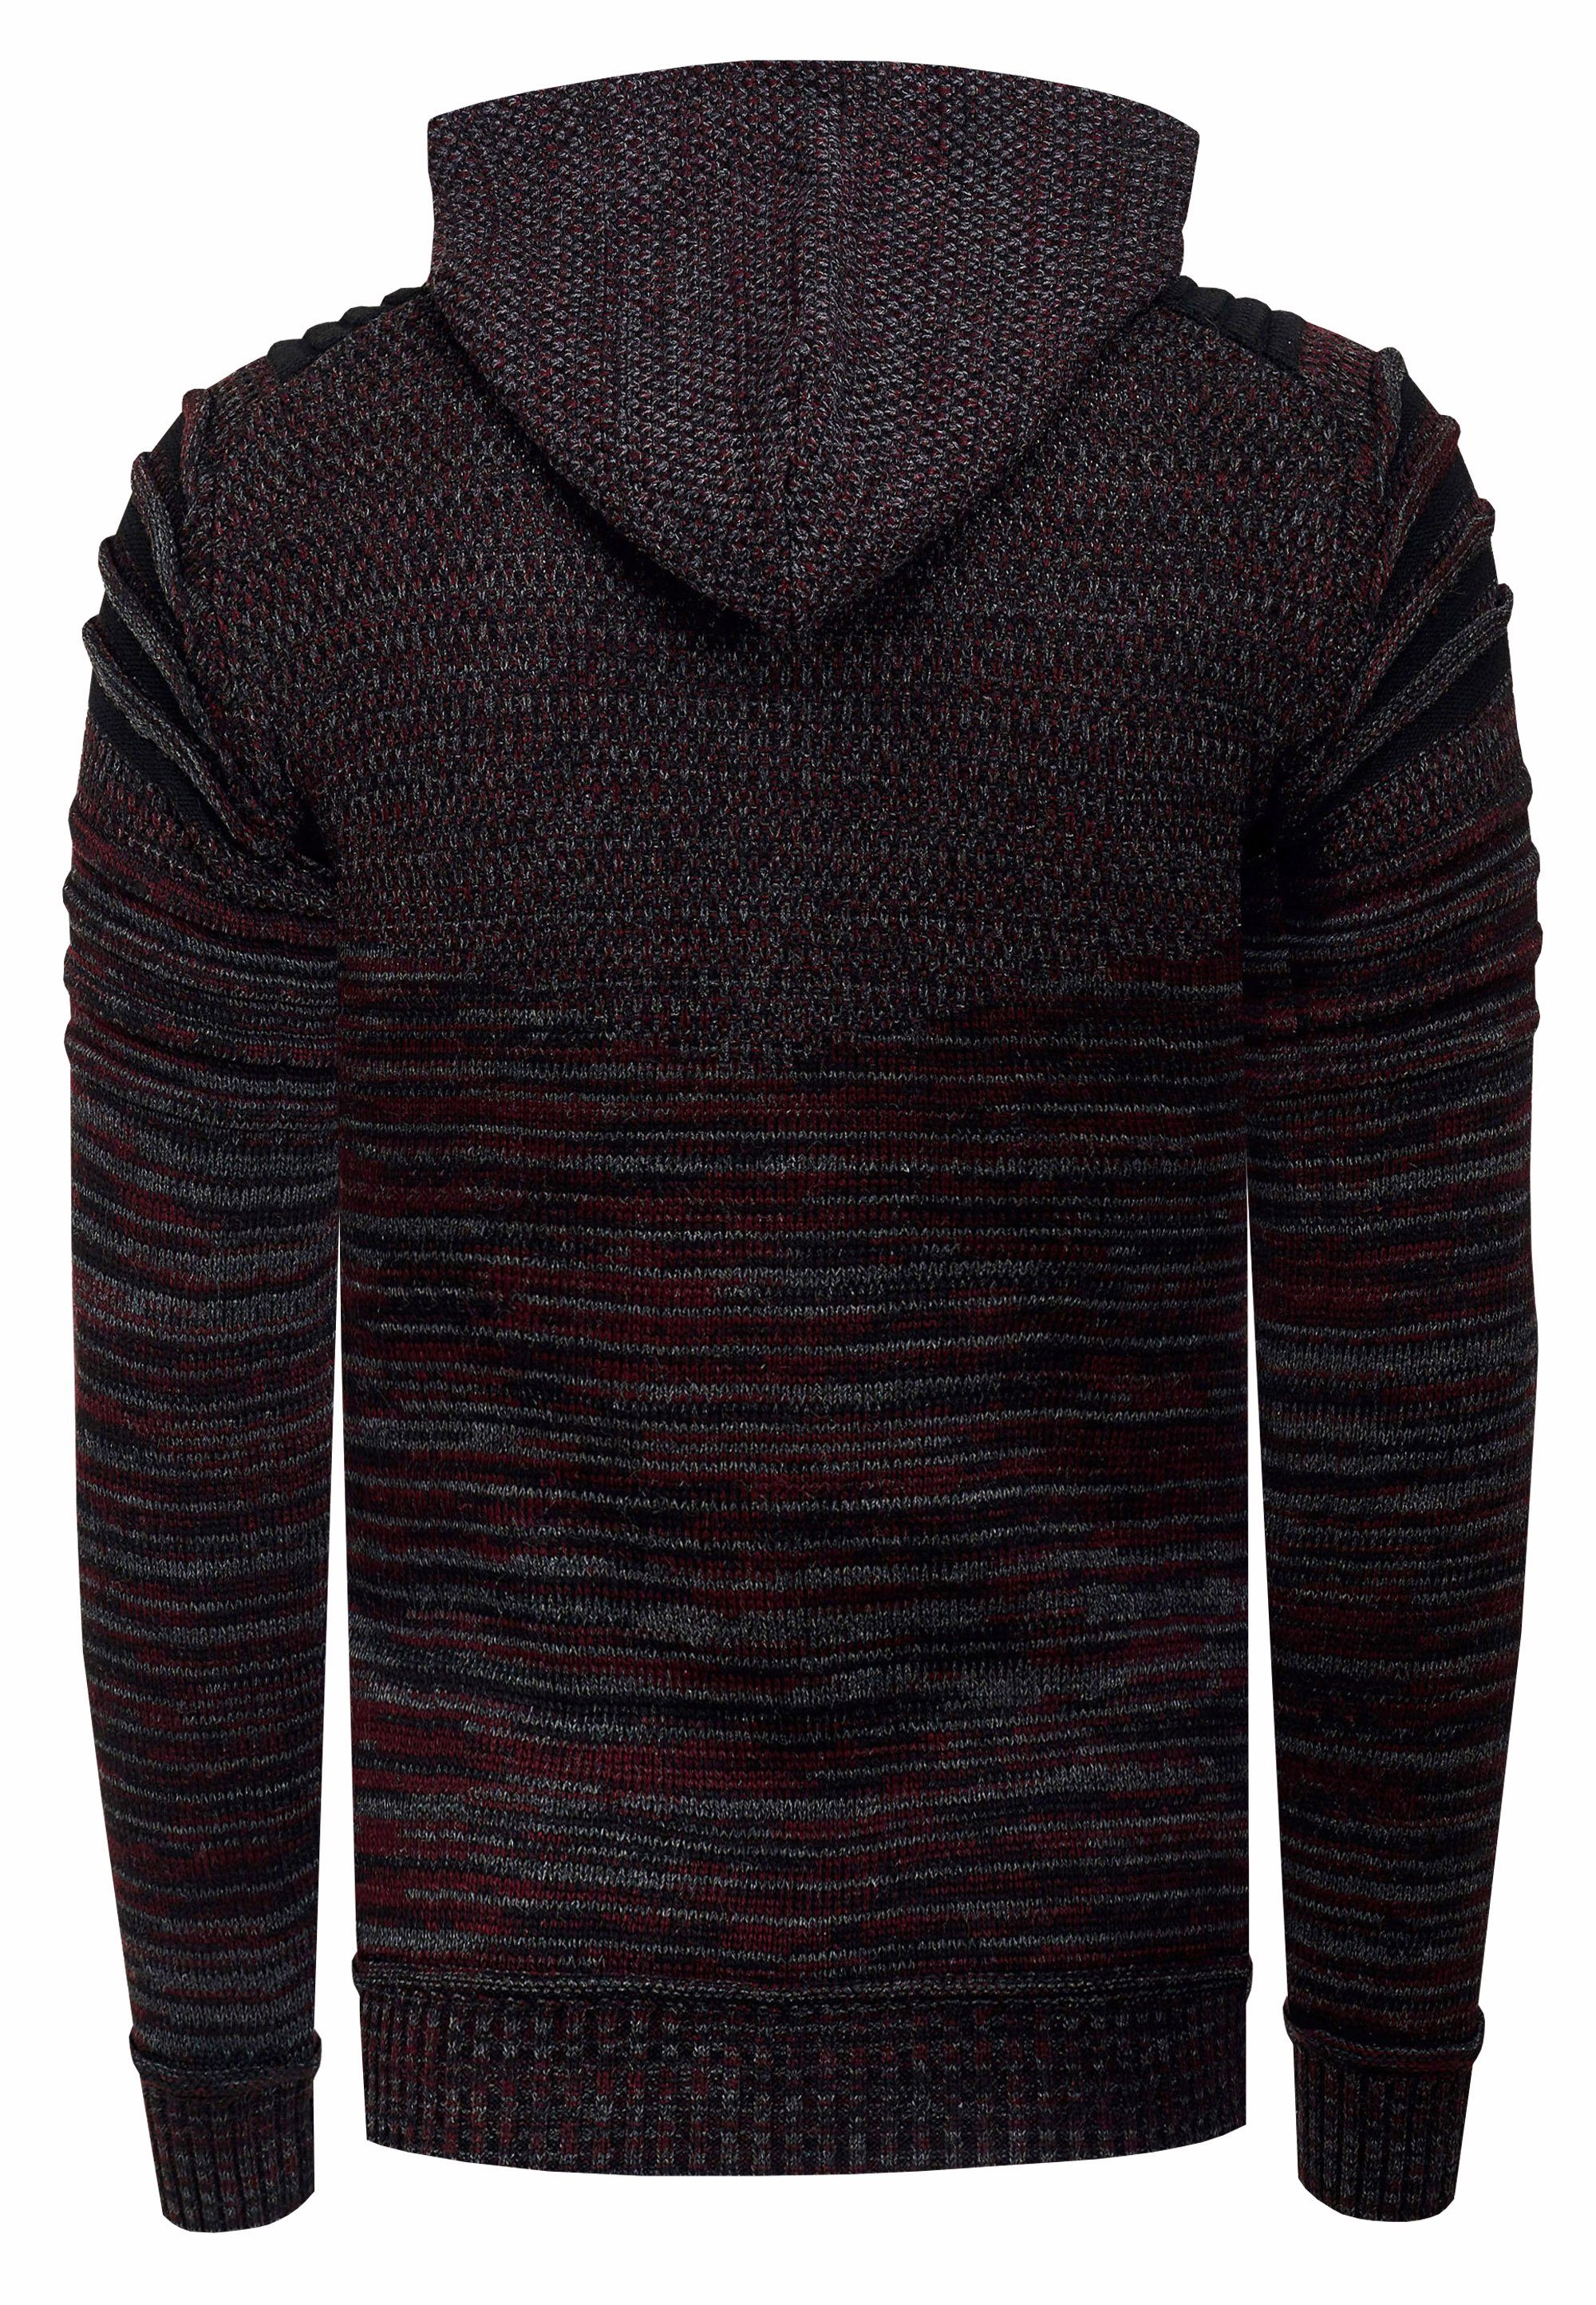 Rusty Neal Kapuzensweatshirt in modernem bordeaux Strickdesign